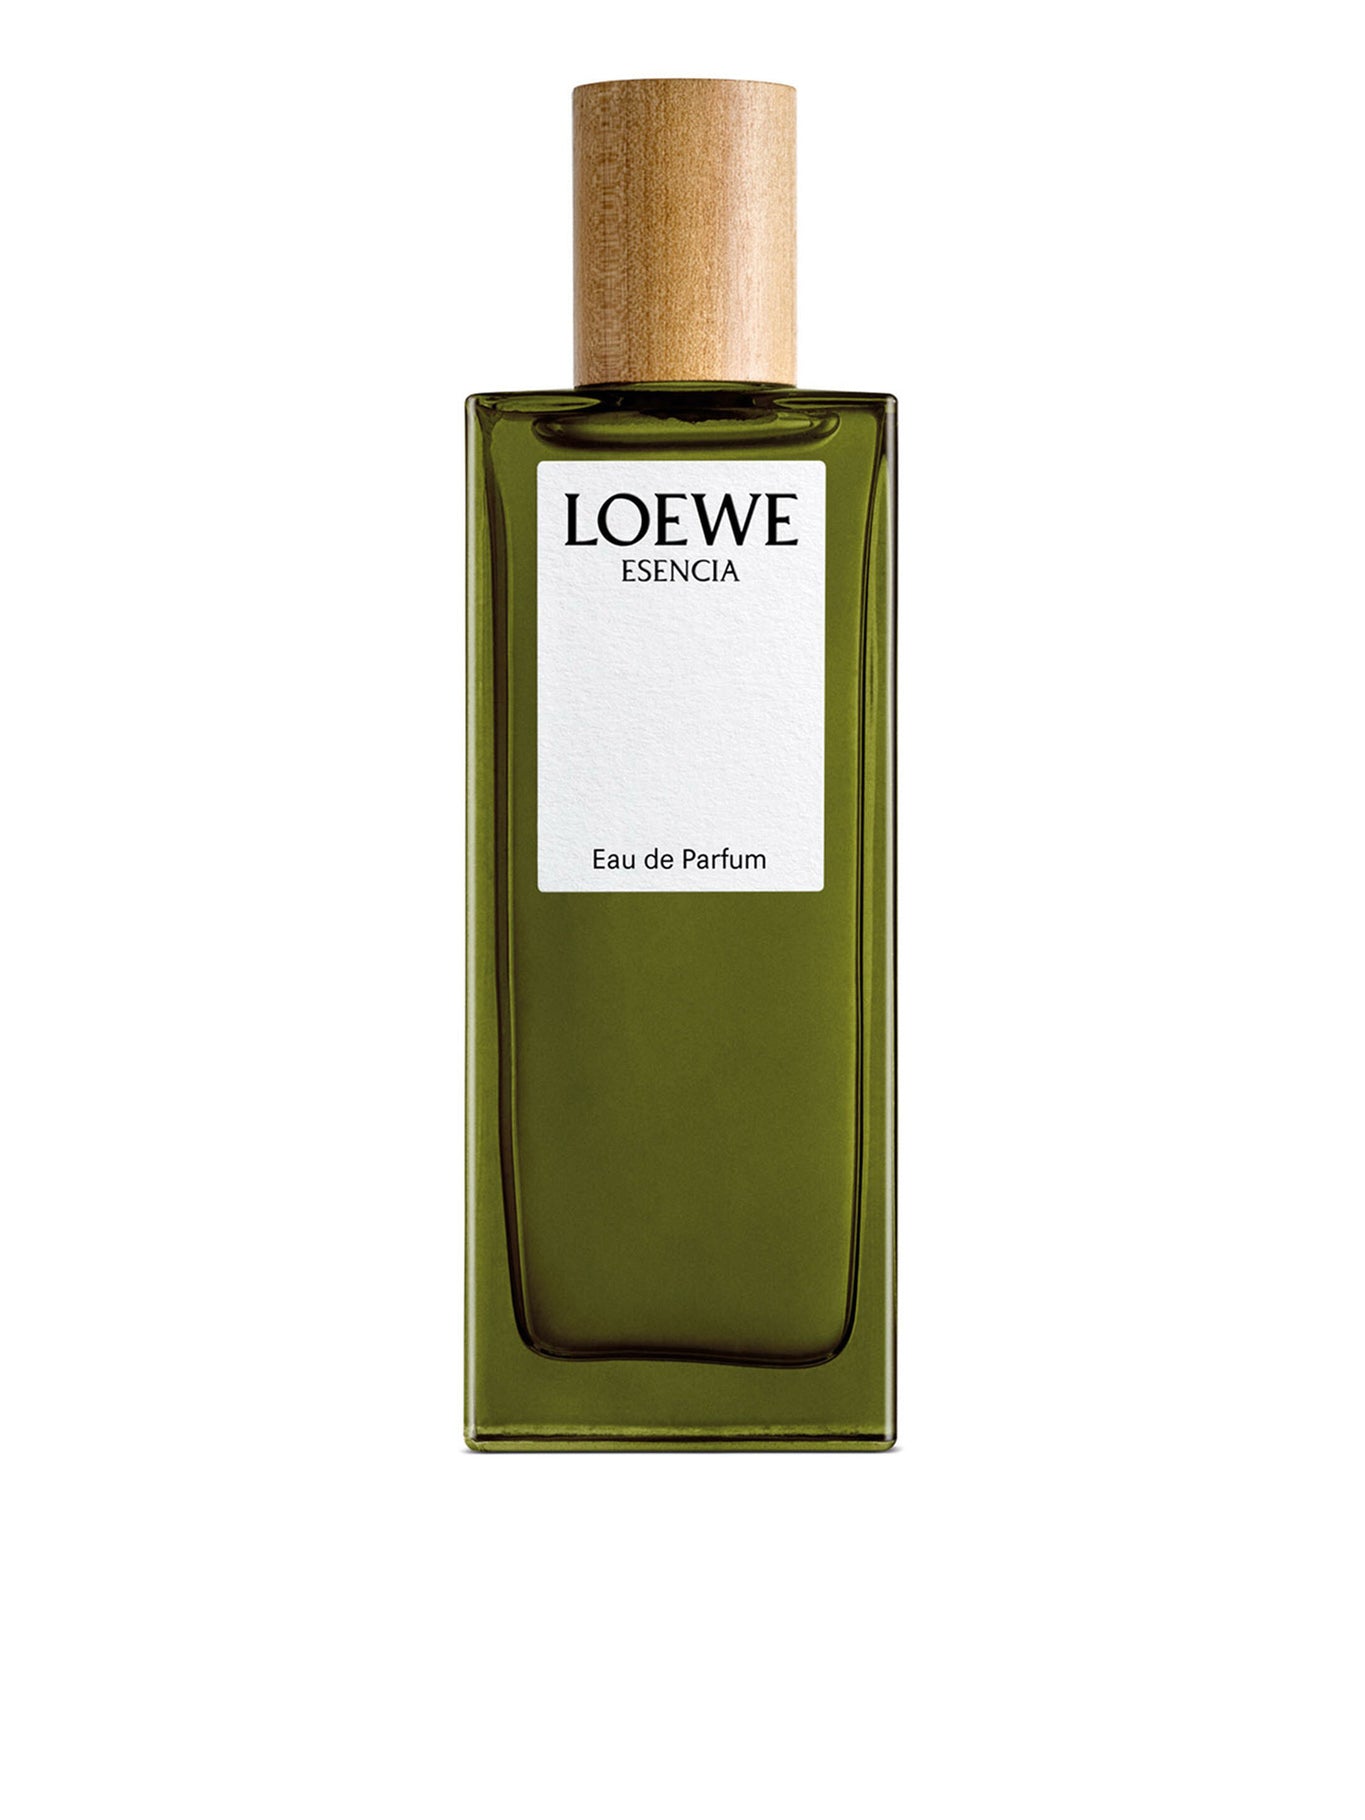 LOEWE Esencia Eau de Parfum 100ML